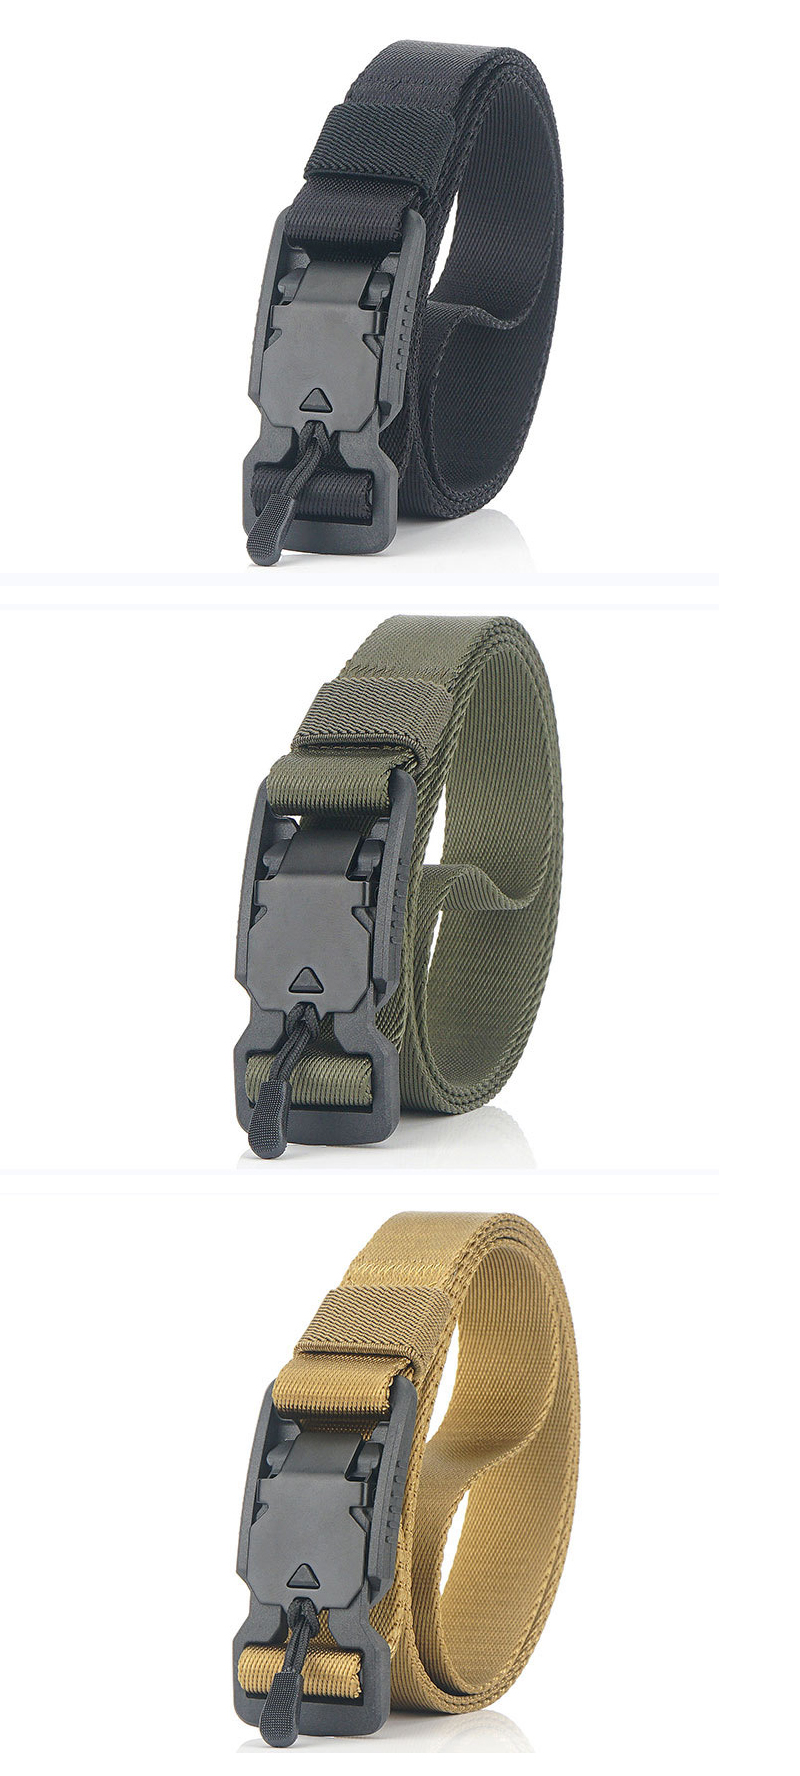 125cm-ENNIU-CX33-25cm-Width-Nylon-Waist-Belts-Quick-Release-Buckle-Tactical-Belt-1566690-2